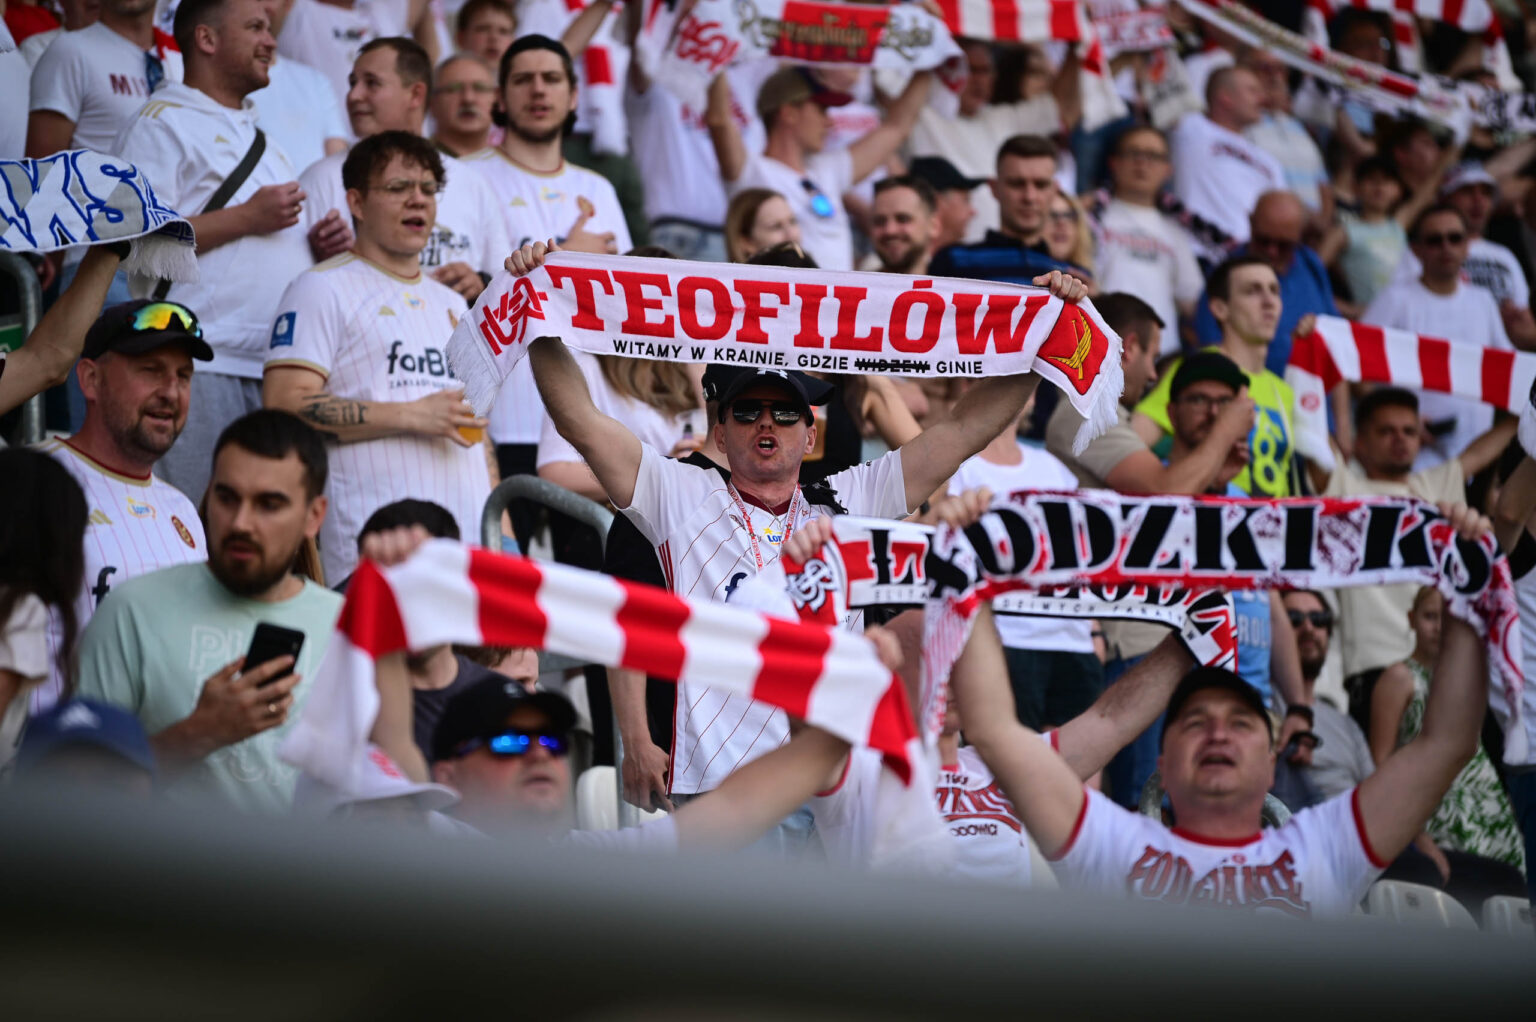 LKS Lodz vs Stal Mielec doping Fot Sebastian Szwajkowski 77